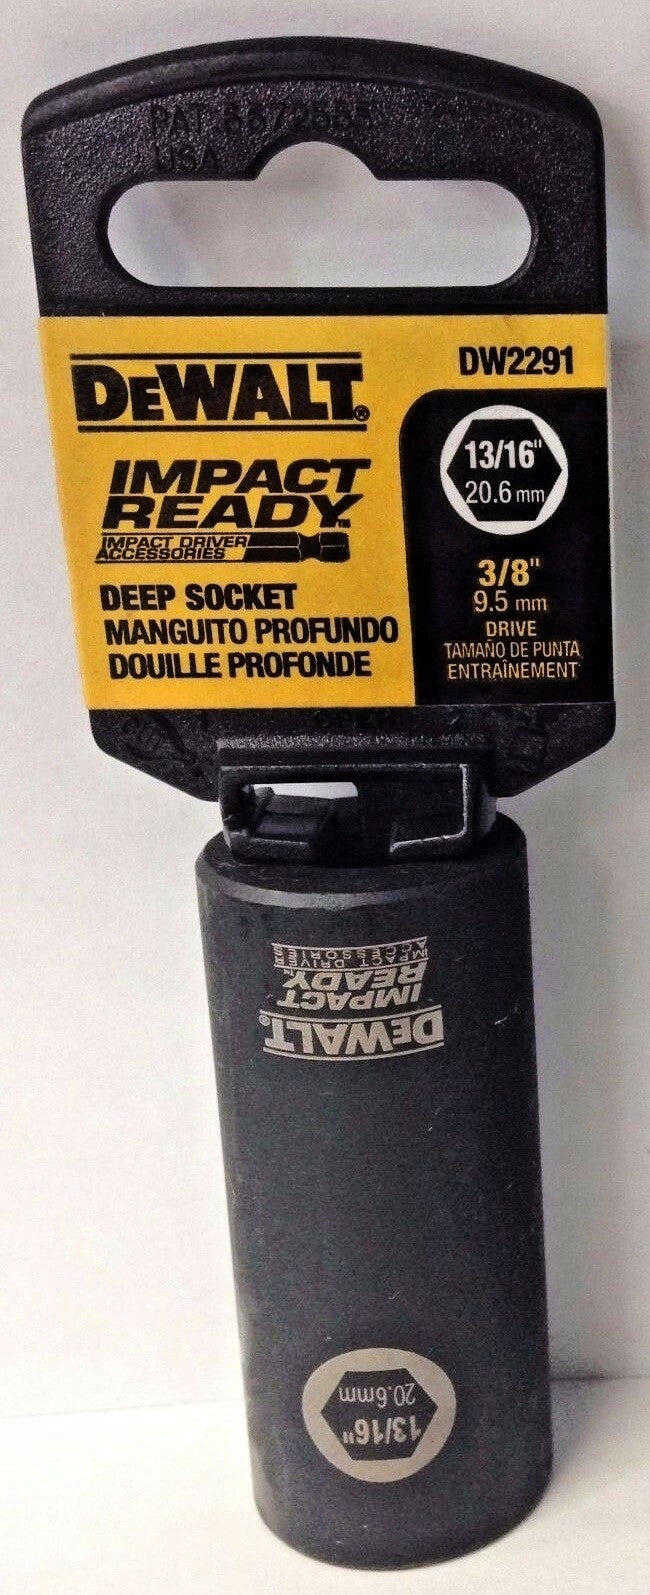 Dewalt DW2291 13/16" Impact Ready Deep Socket 3/8" Drive